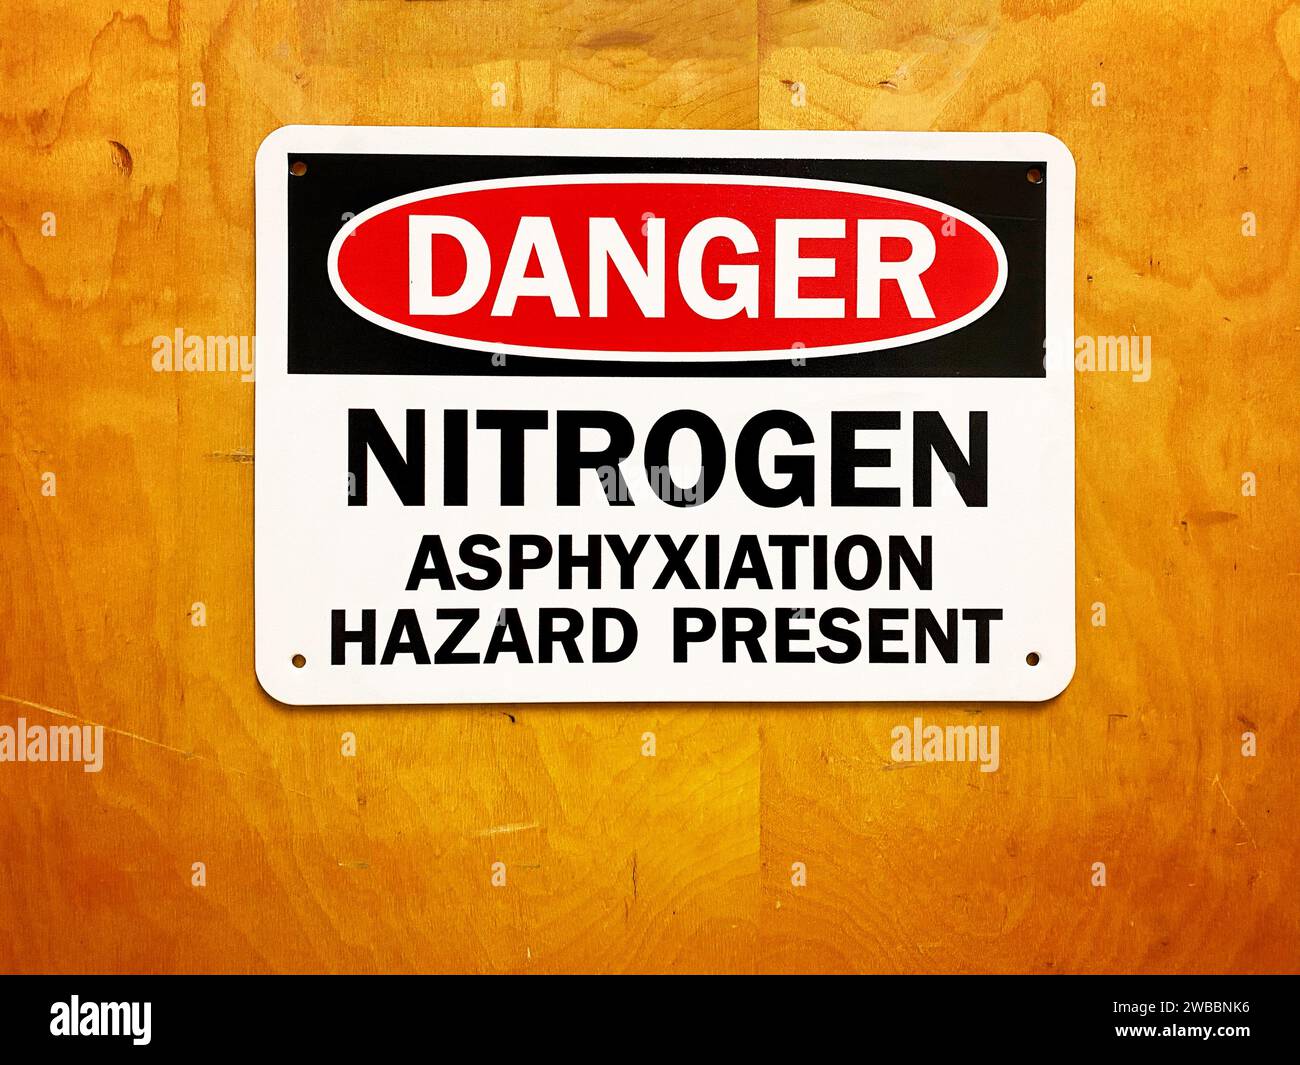 Danger: Nitrogen Asphyxiation Hazard Present sign Stock Photo